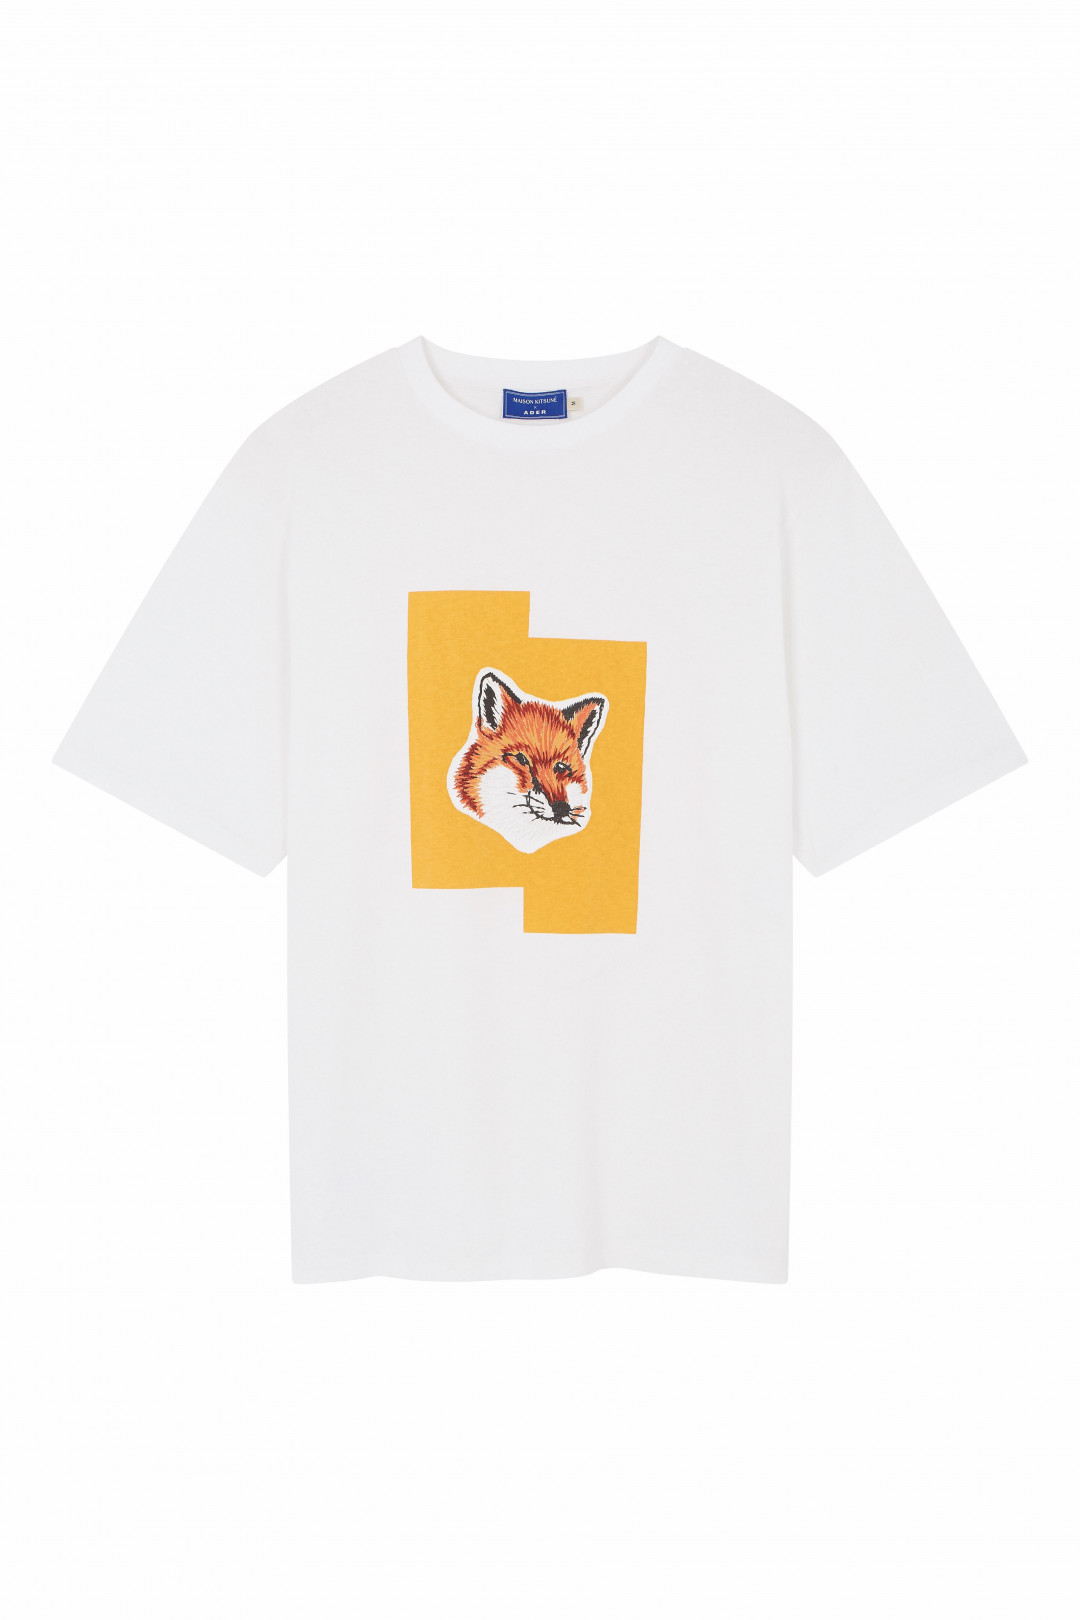 「TEE-SHIRT FOX HEAD TETRIS」（1万4,000円）